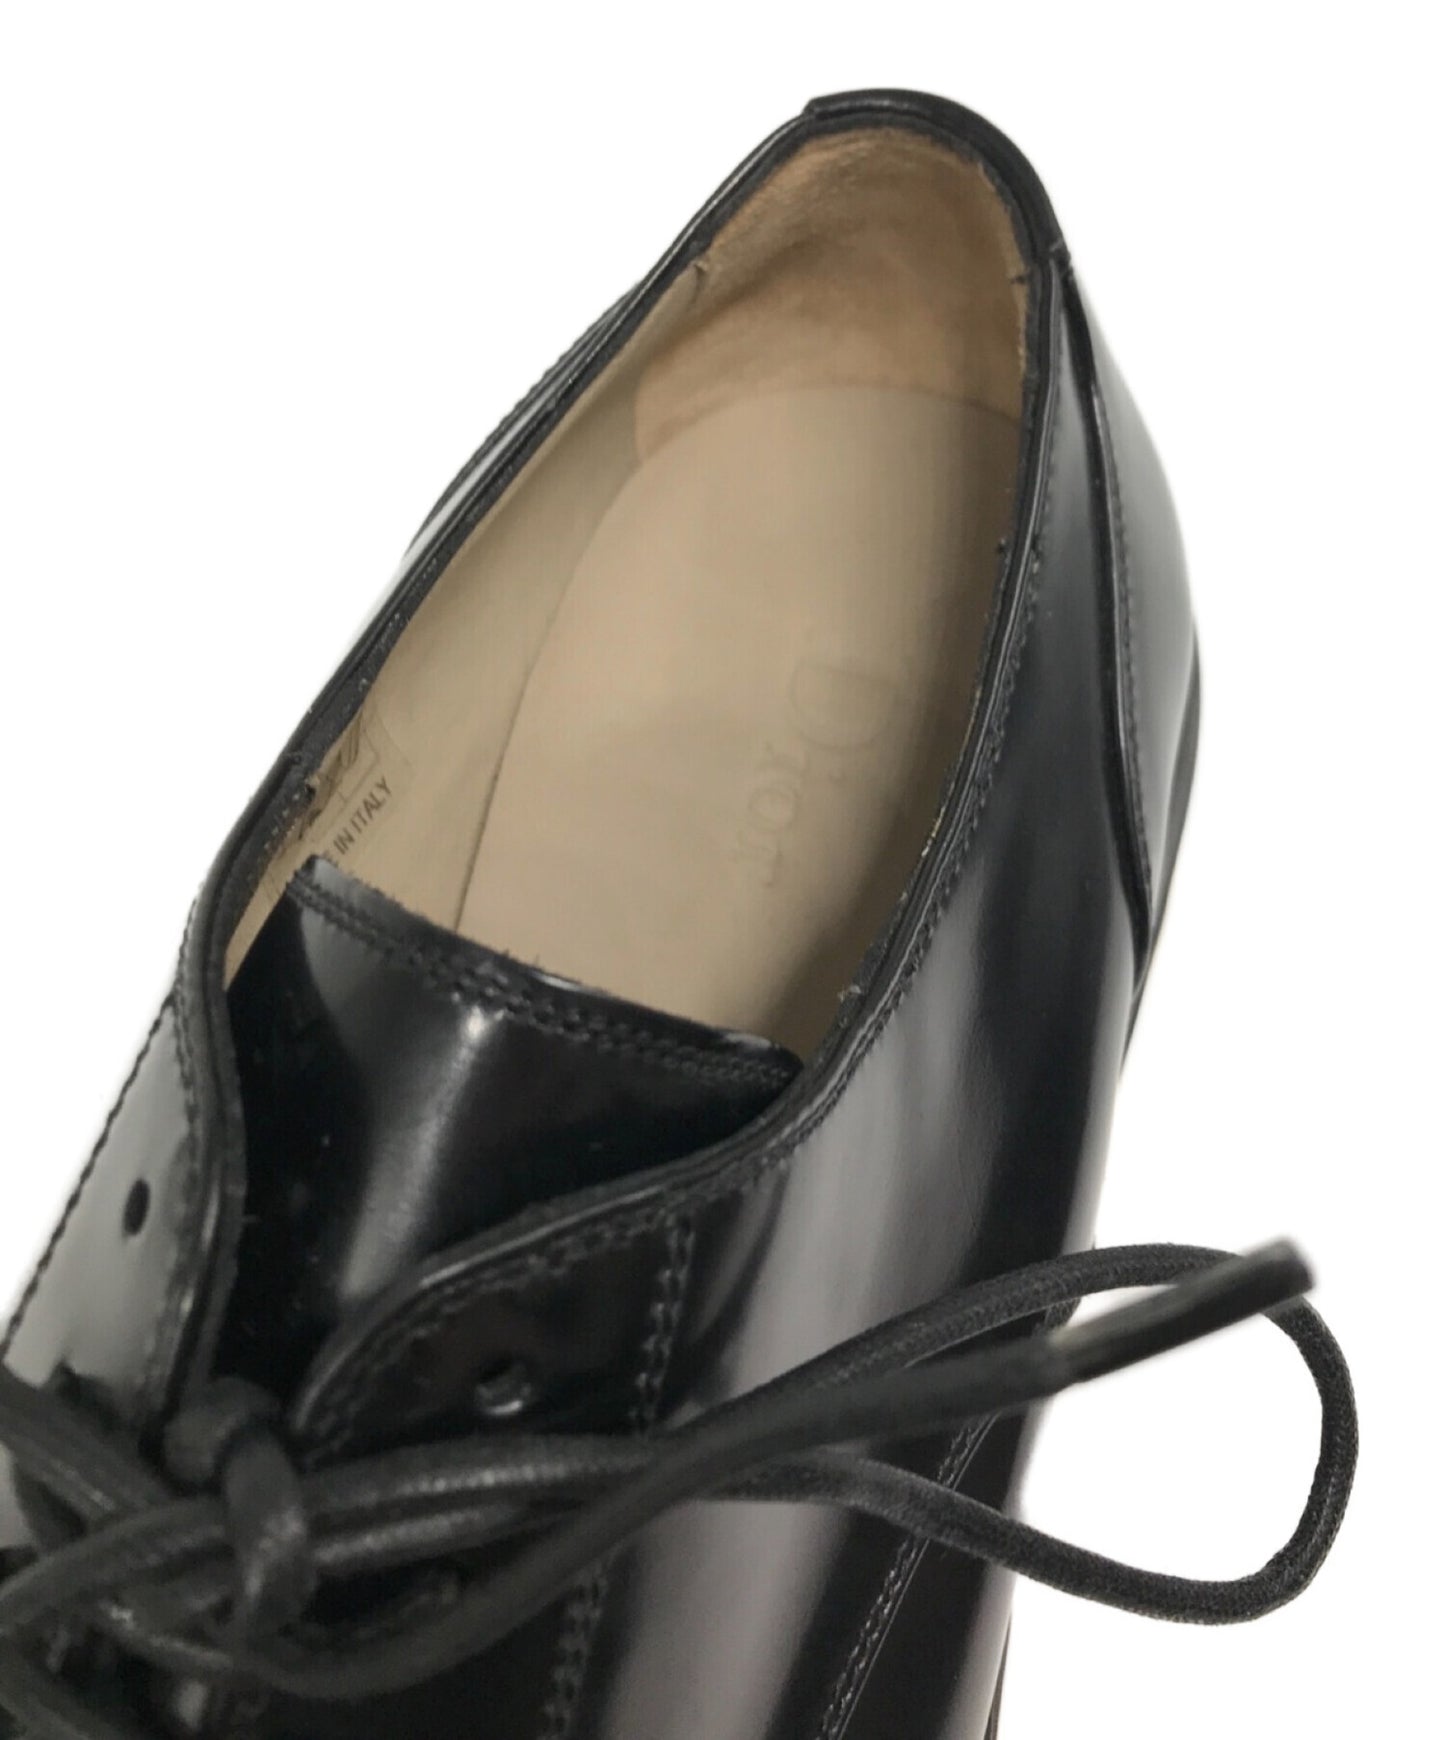 Dior Homme 평범한 발가락 가죽 신발 15h fr